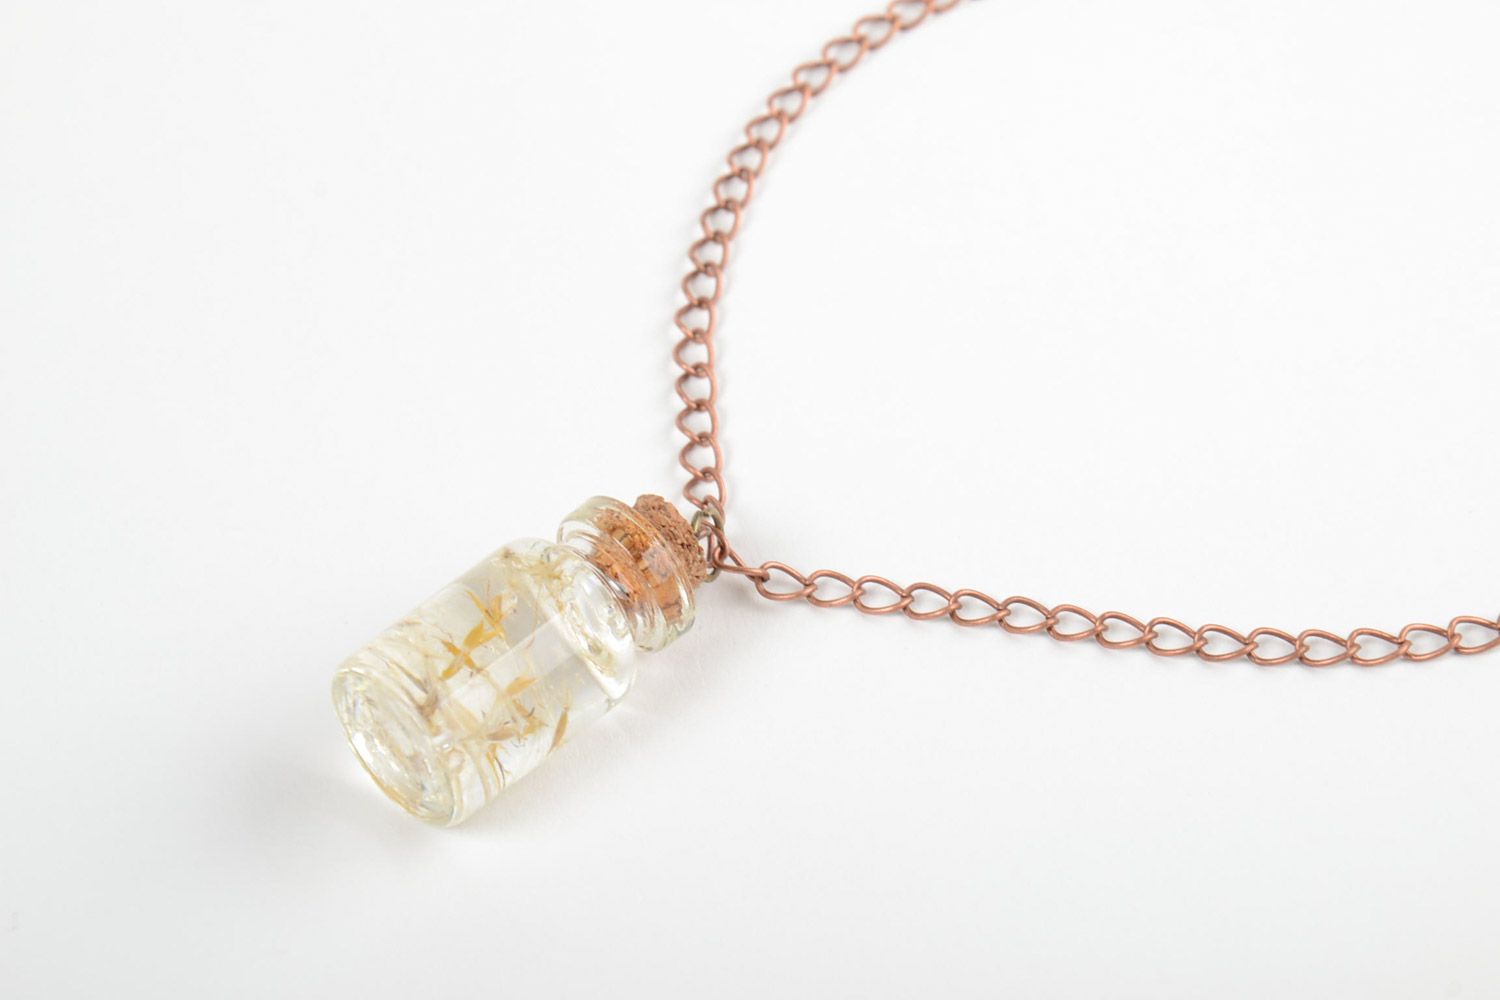 Handmade glass vial pendant with flowers in epoxy resin inside Dandelions photo 3